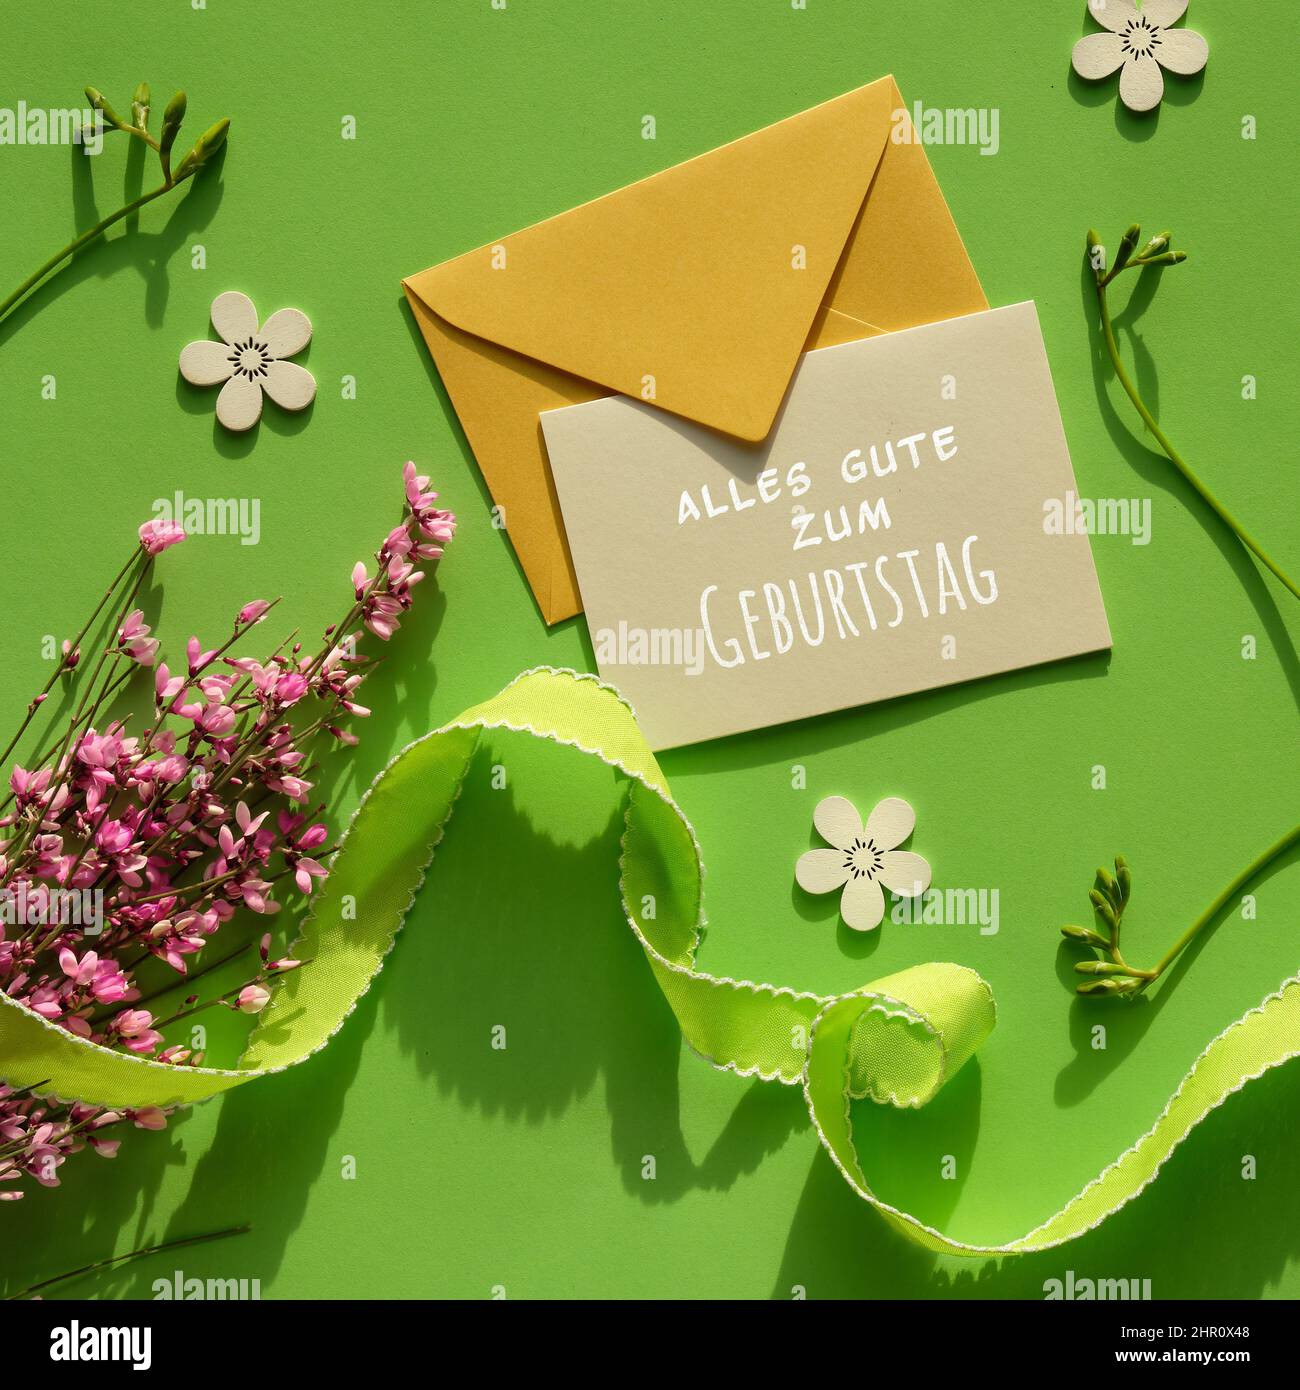 Alles gute zum Geburtstag means Happy Birthday. Envelope, greeting card, spring flowers. Stock Photo